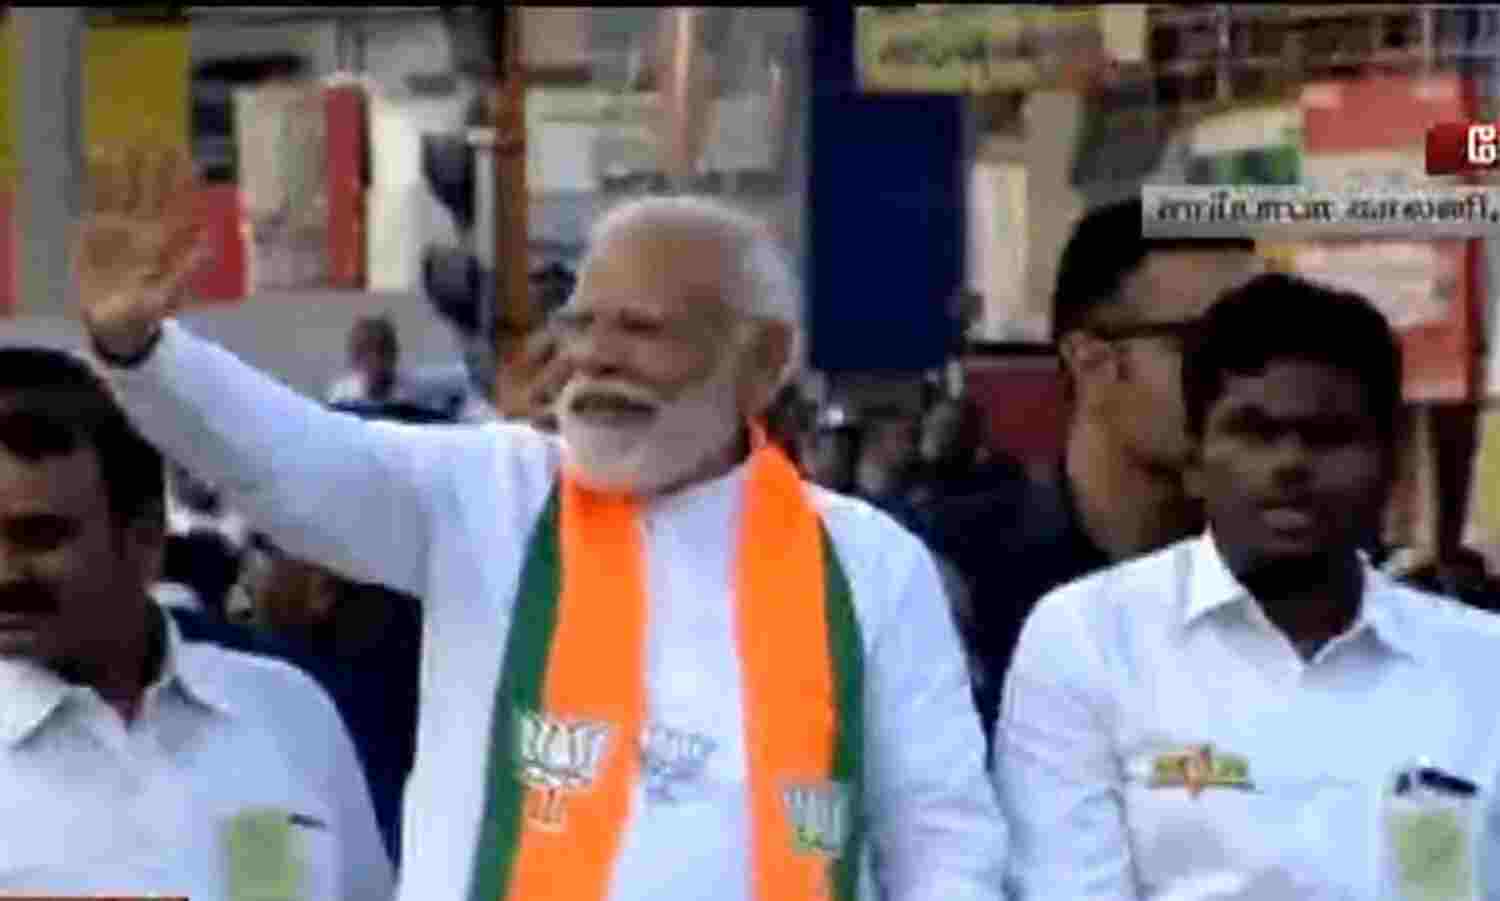 PM Modi is accompanied by TN BJP Chief K.... ... PM Roadshow in Coimbatore live: BJP party-men chant slogans hailing Modi